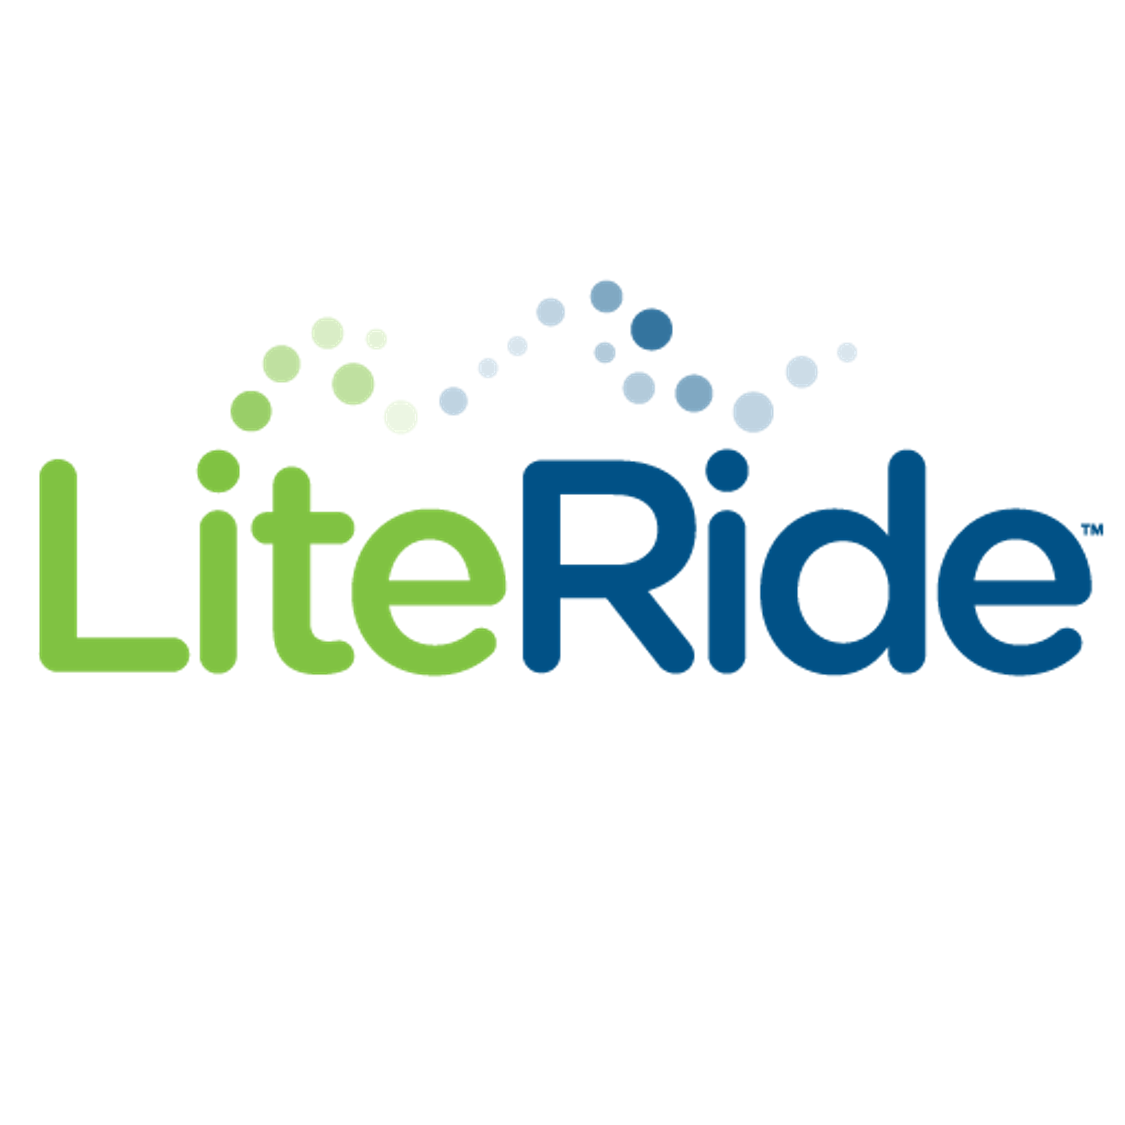 LiteRide™